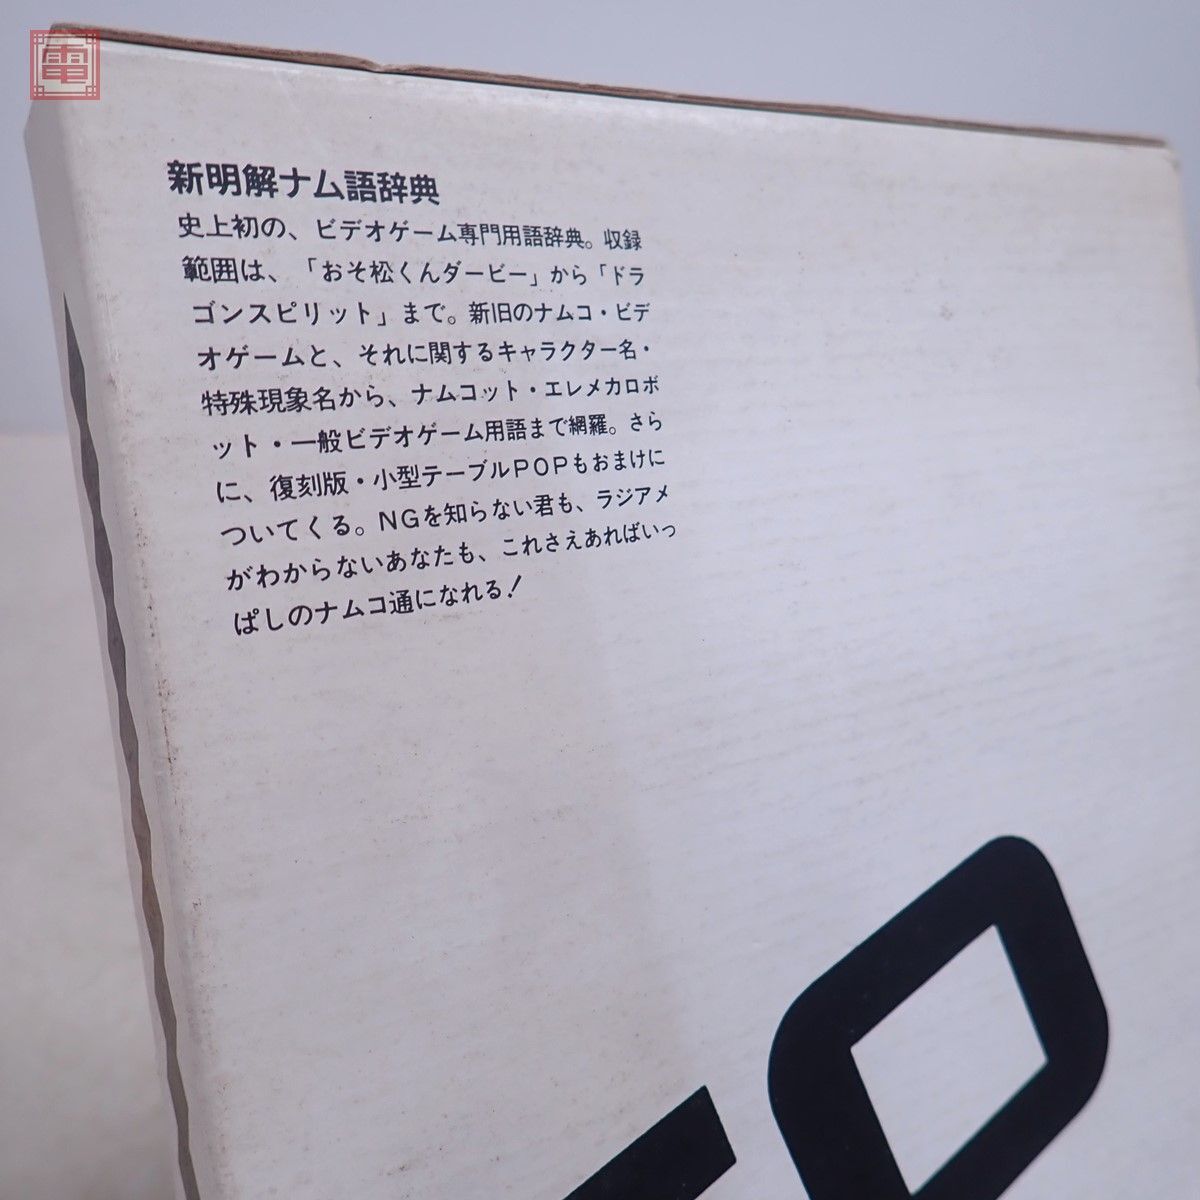  publication new Akira .nam language dictionary gorgeous limitation version west island . virtue Namco NAMCO 1987 year Showa era 62 year the first version Japan SoftBank [20